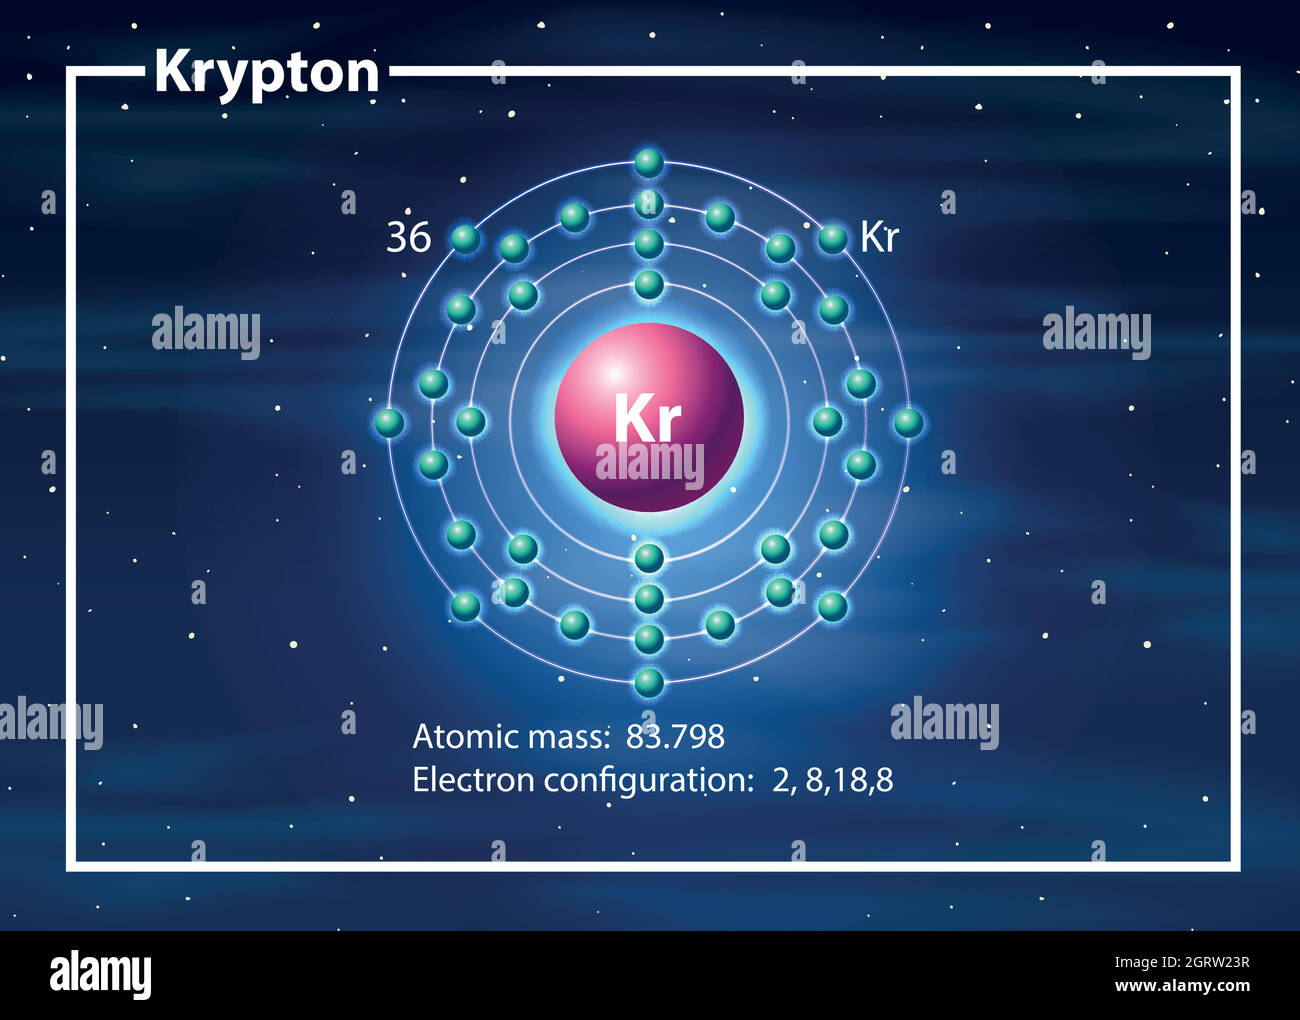 a krypton atom diagram Stock Vector